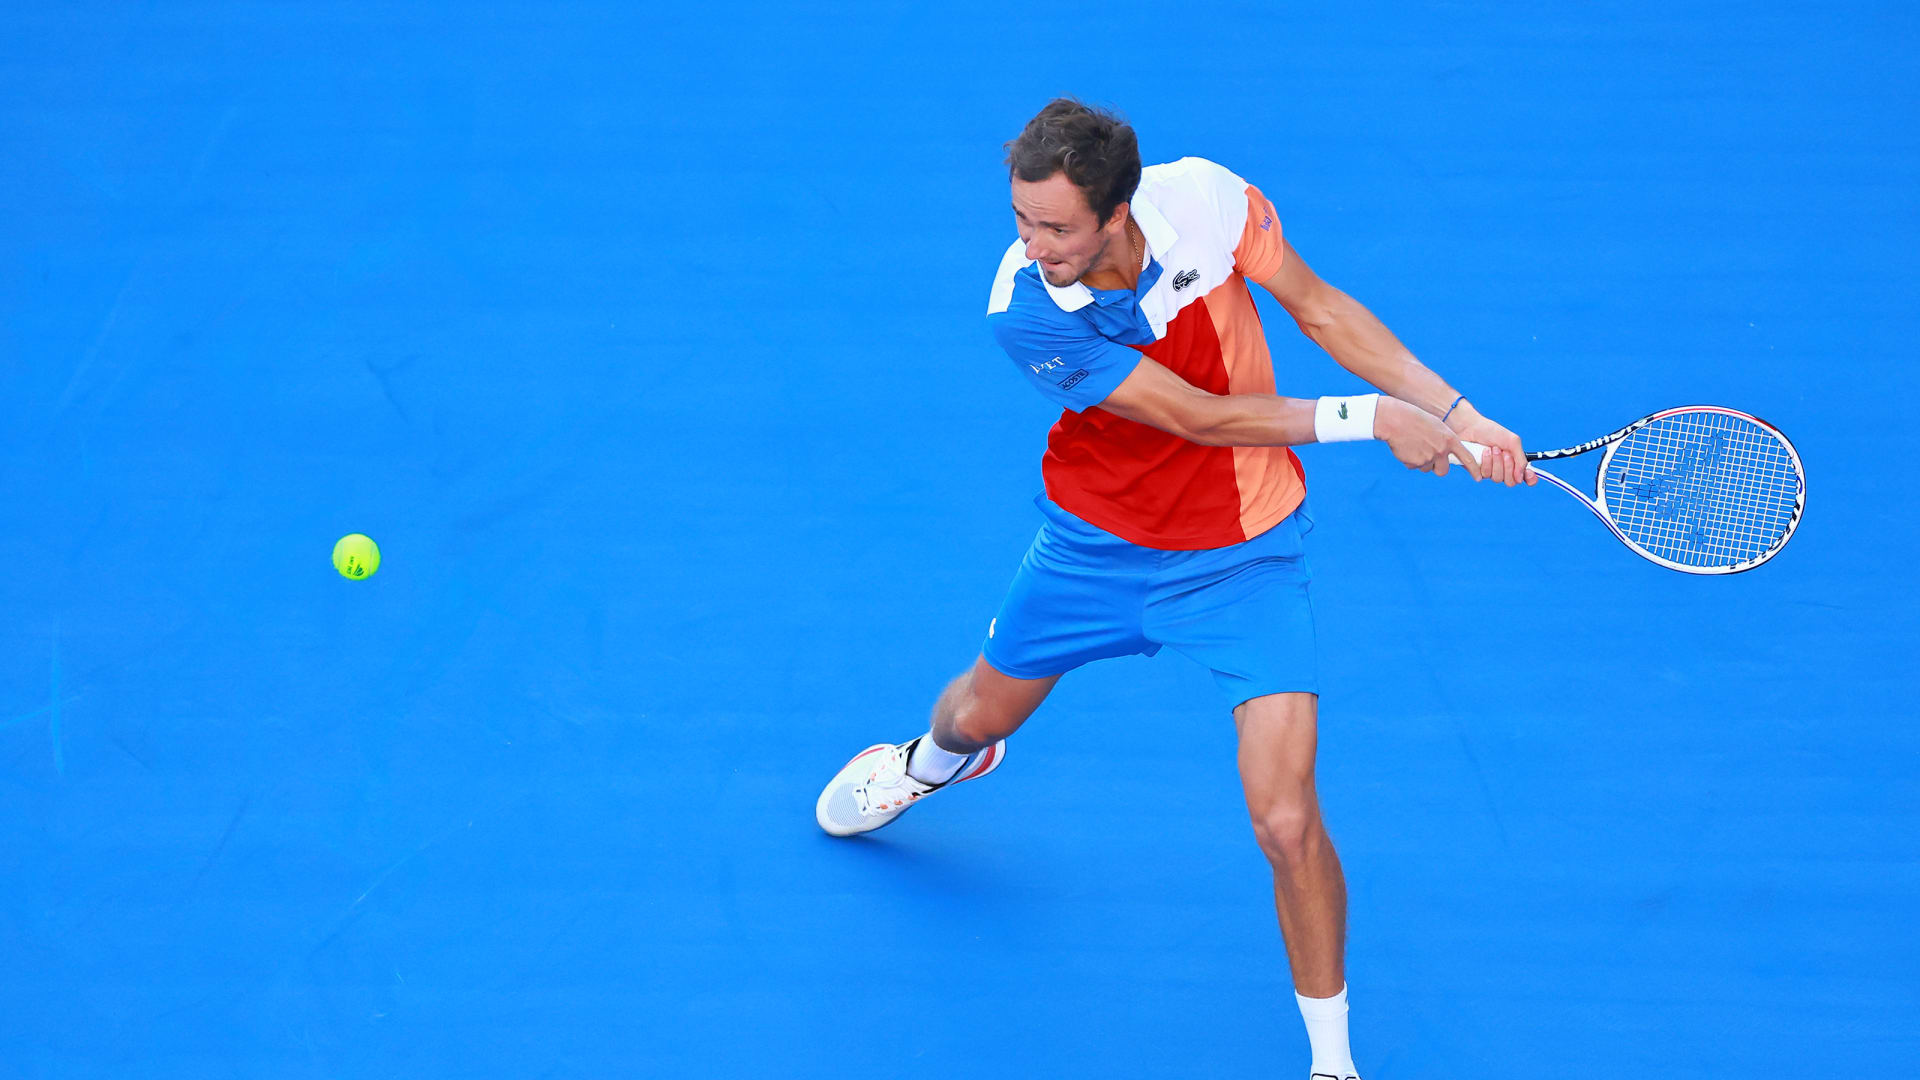 "Ukraine invasion affecting tennis"-Daniil Medvedev